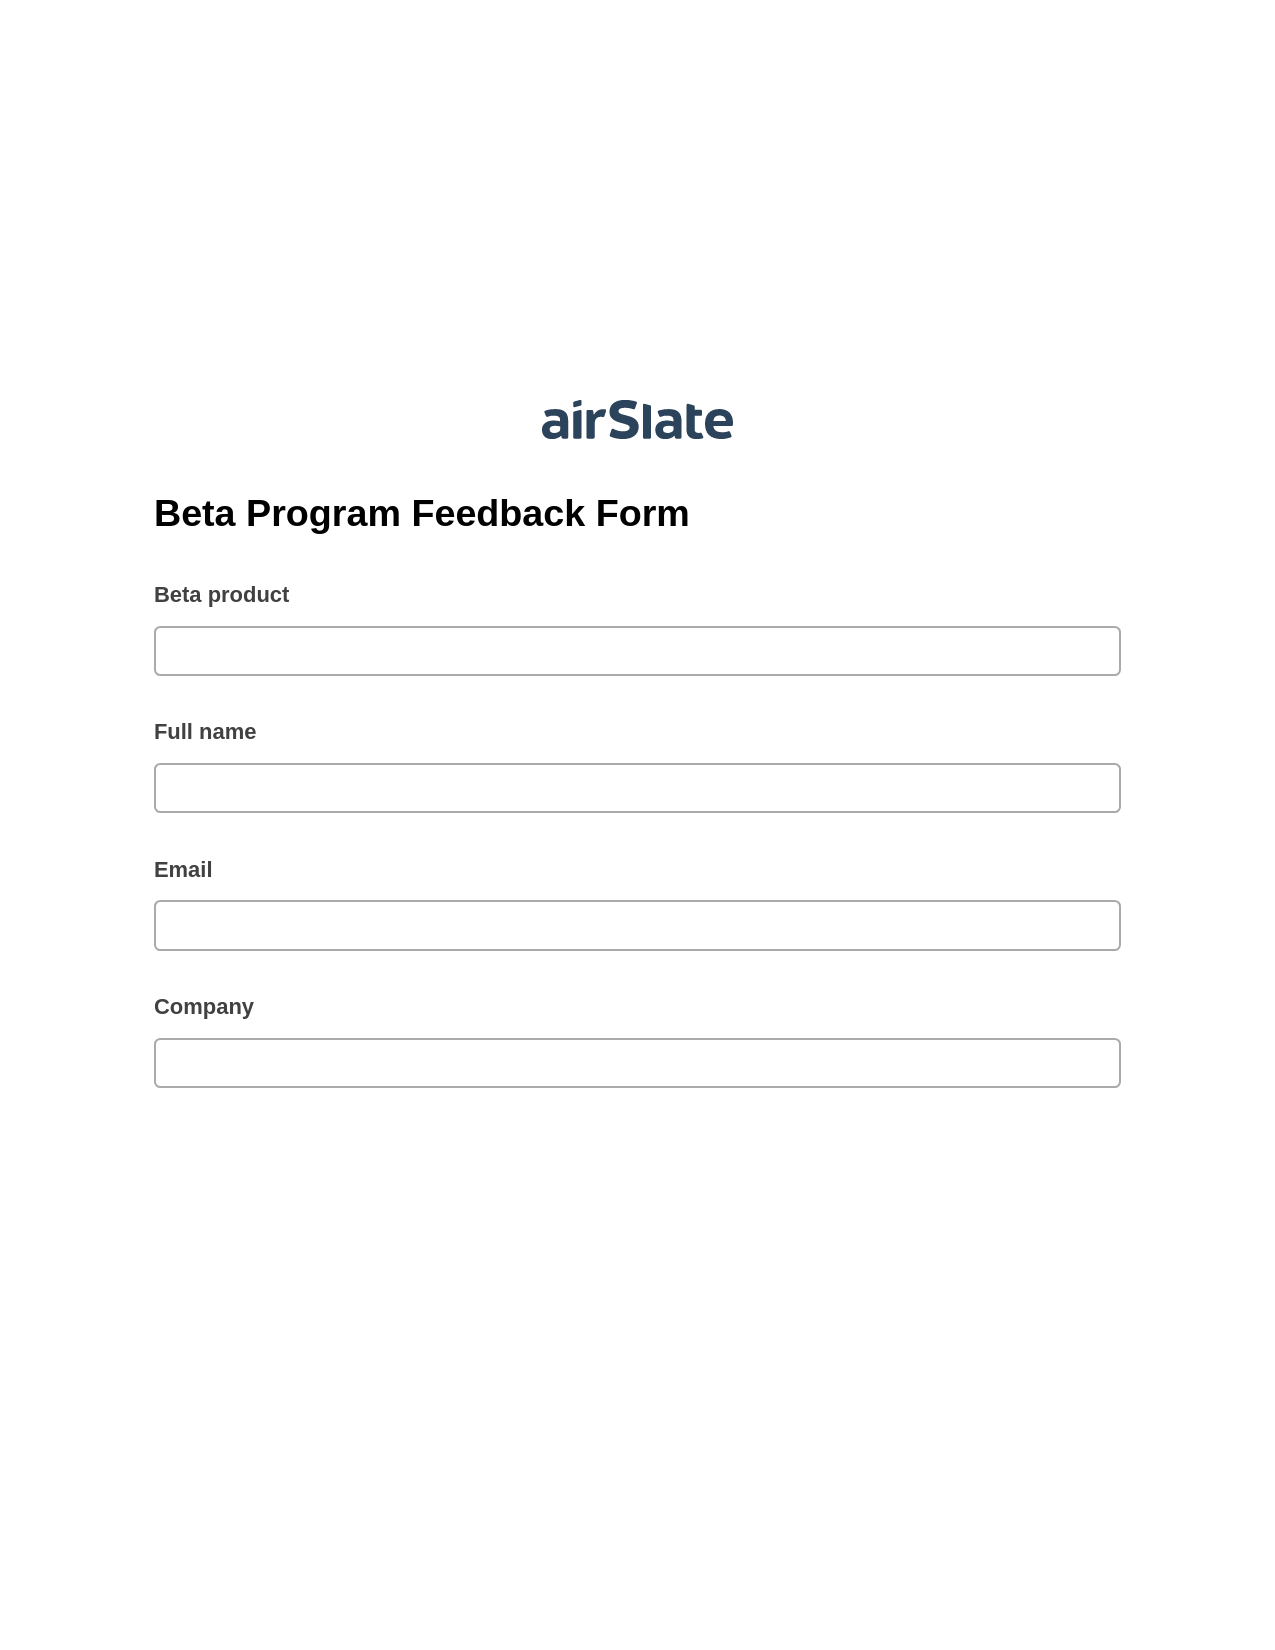 Multirole Beta Program Feedback Form Pre-fill from MySQL Bot, SendGrid send Campaign bot, Google Drive Bot